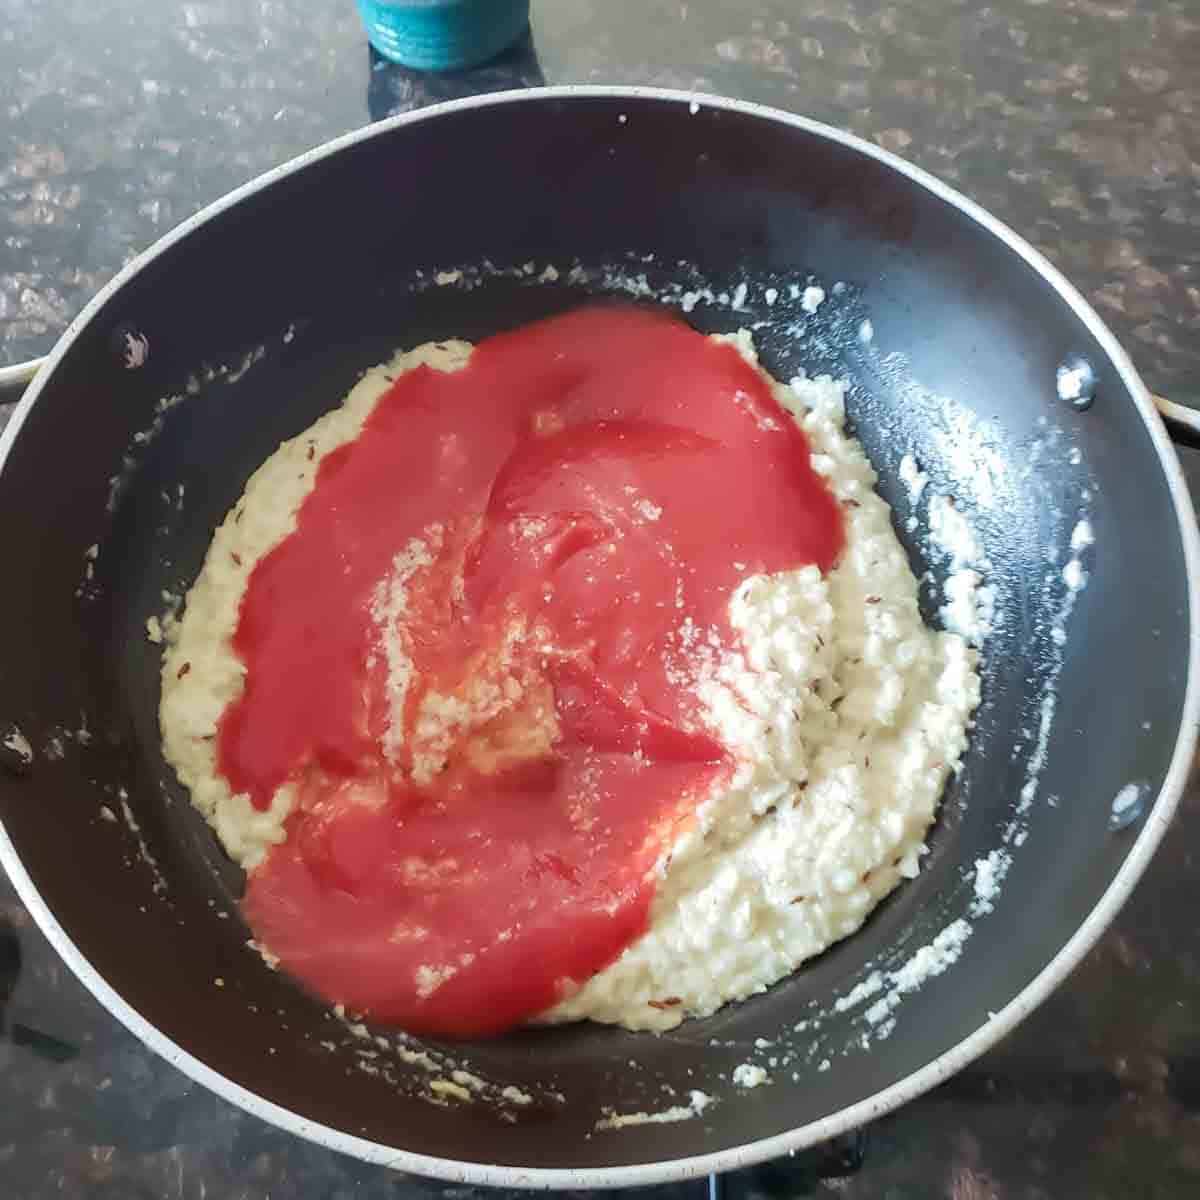 Process step two- adding tomato puree to the mix.